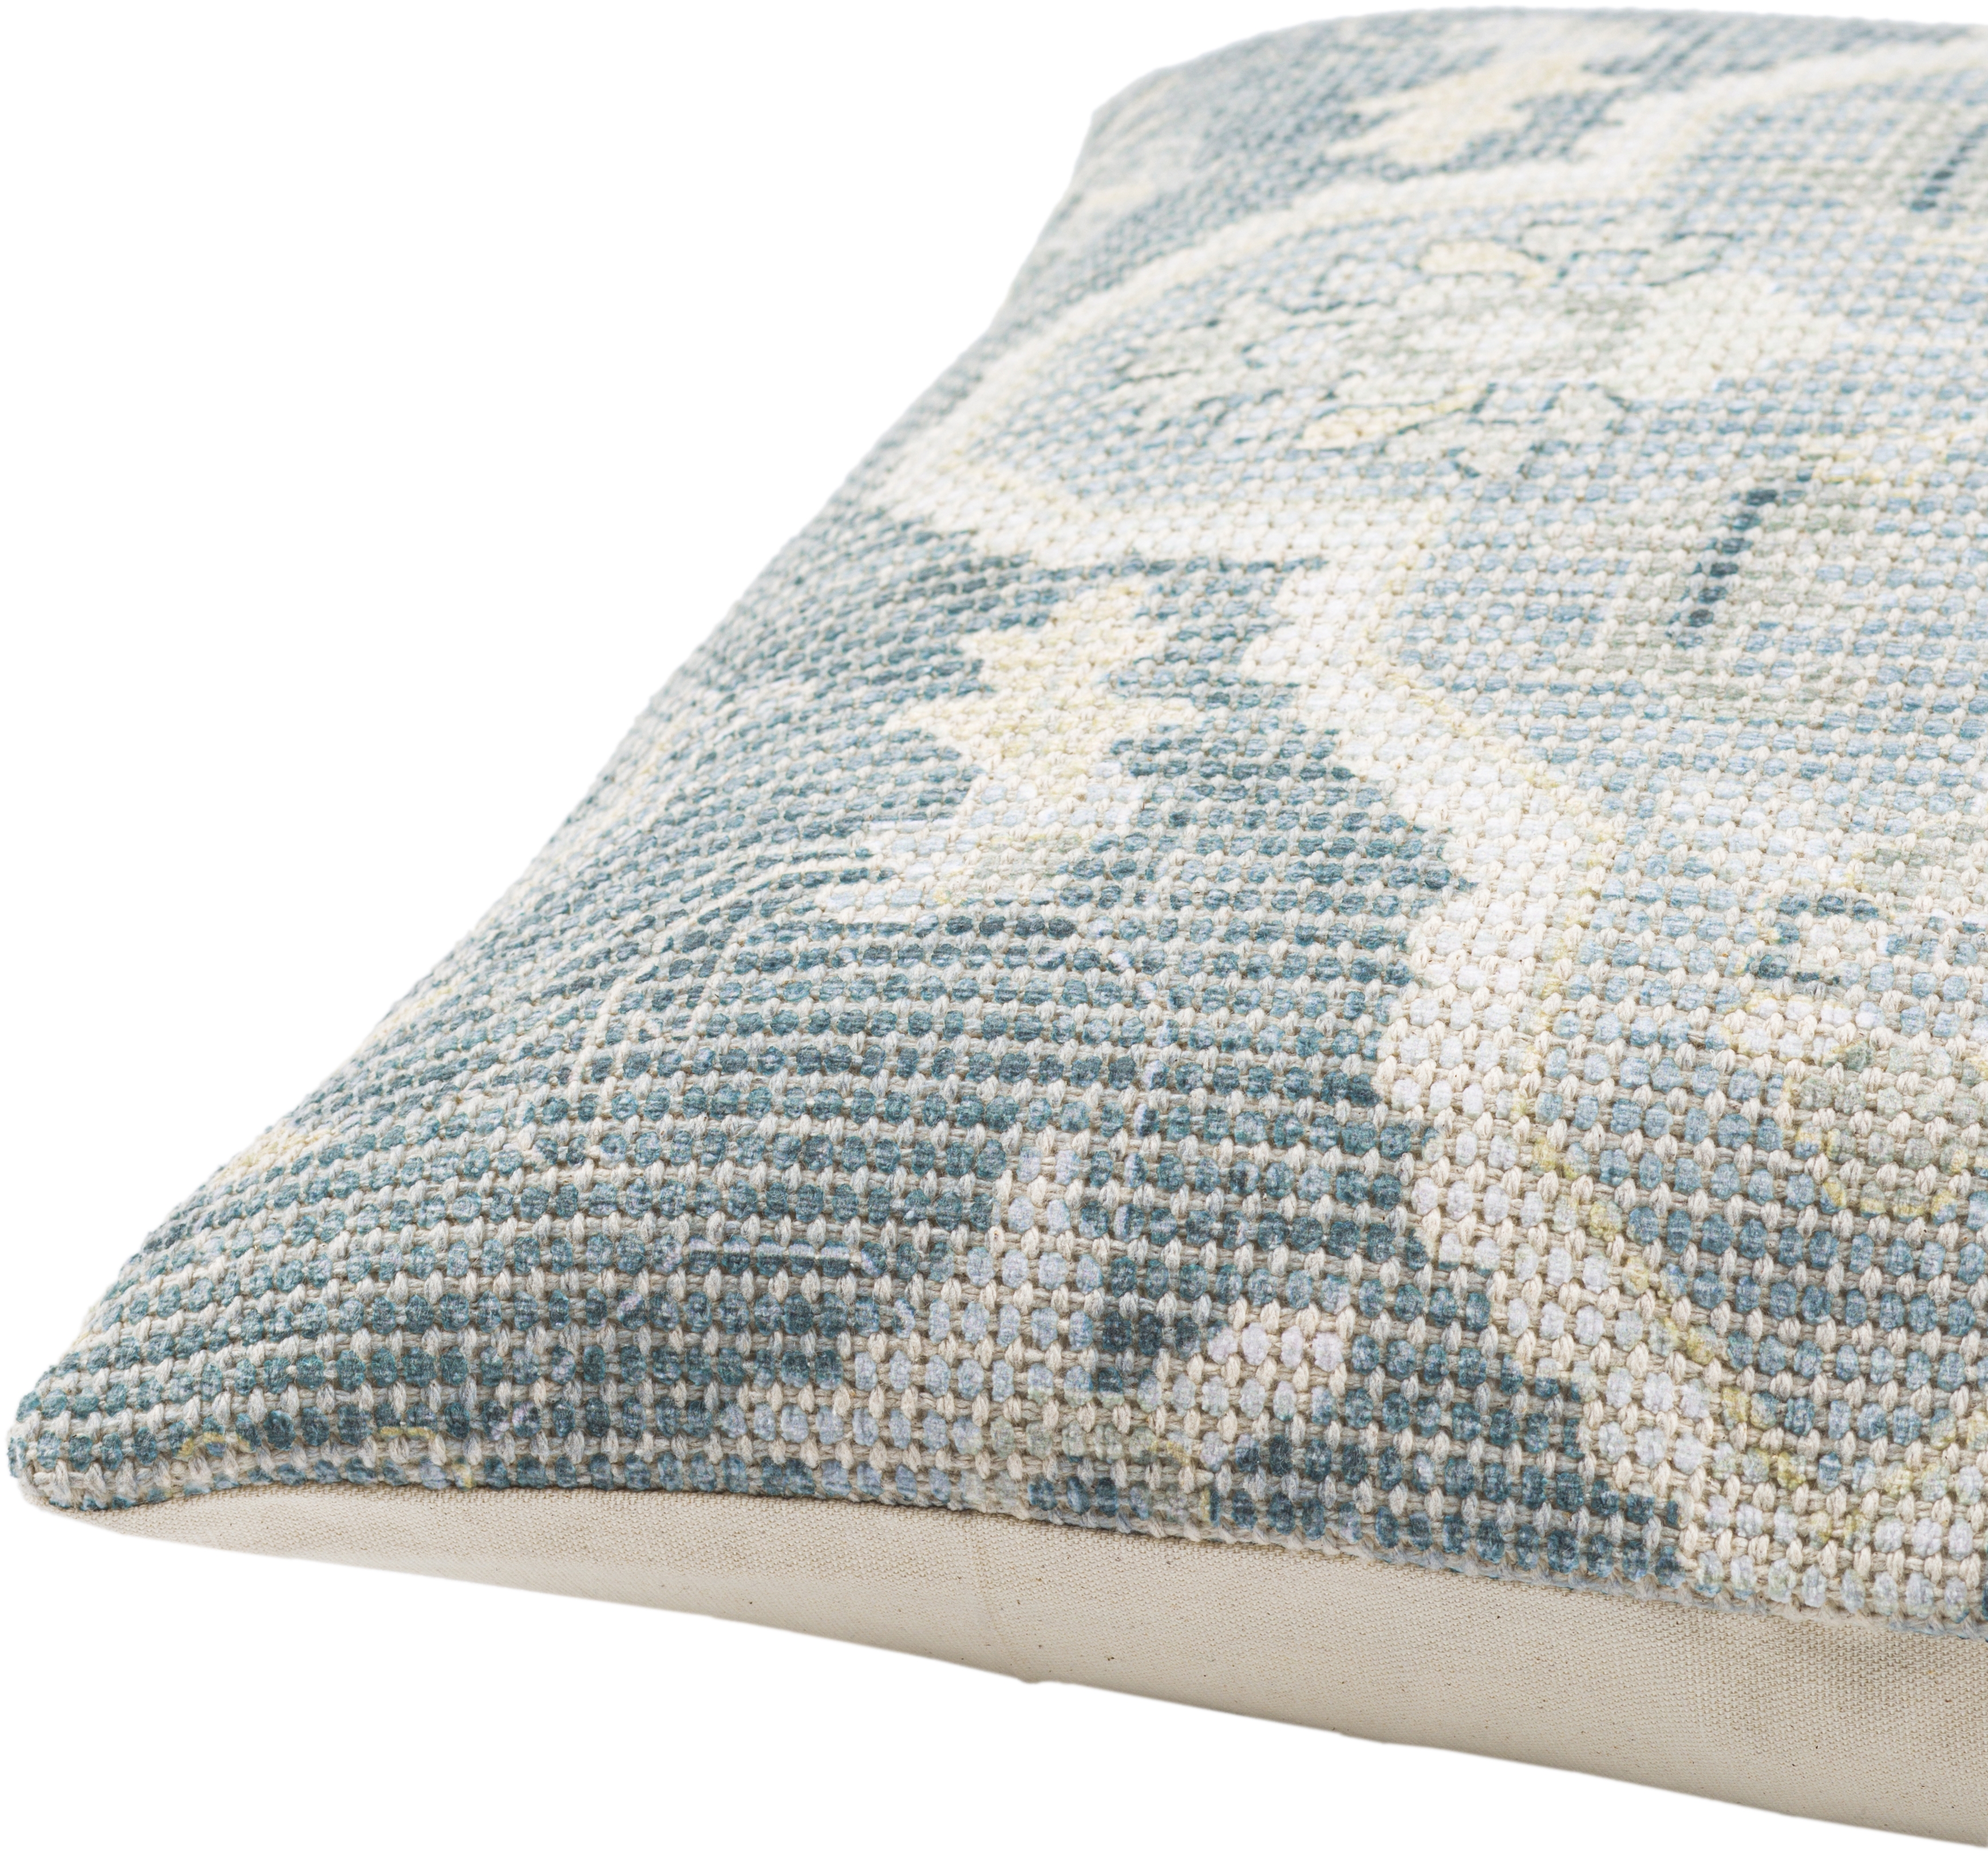 Samsun Throw Pillow, Medium, pillow cover only - Image 2